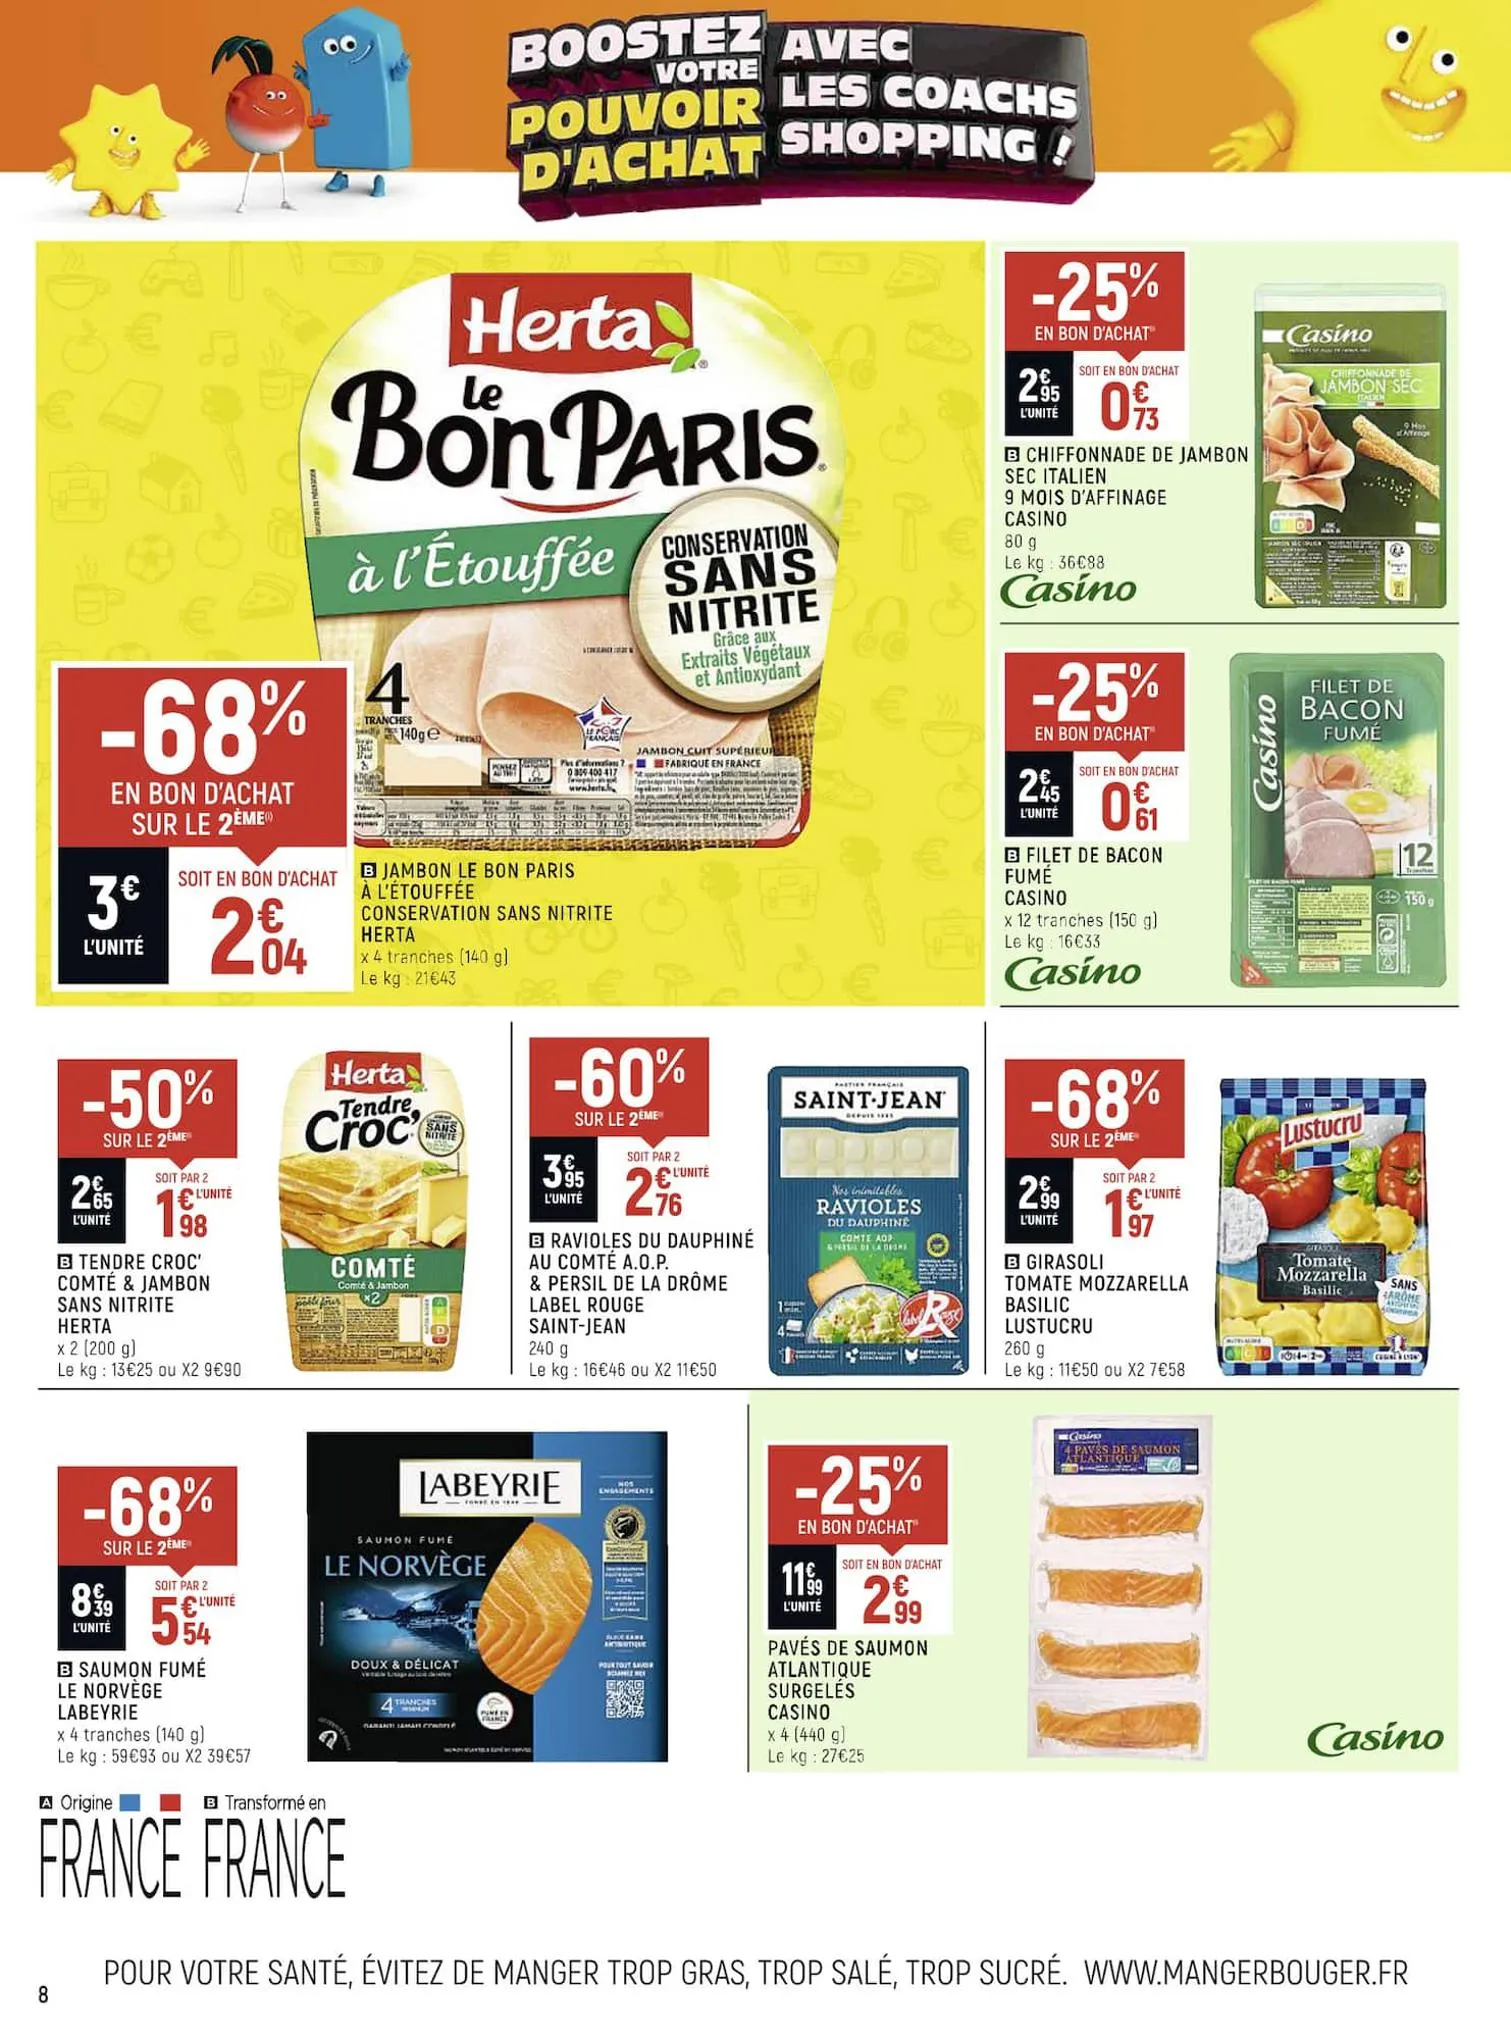 Catalogue Les coachs shopping, page 00008